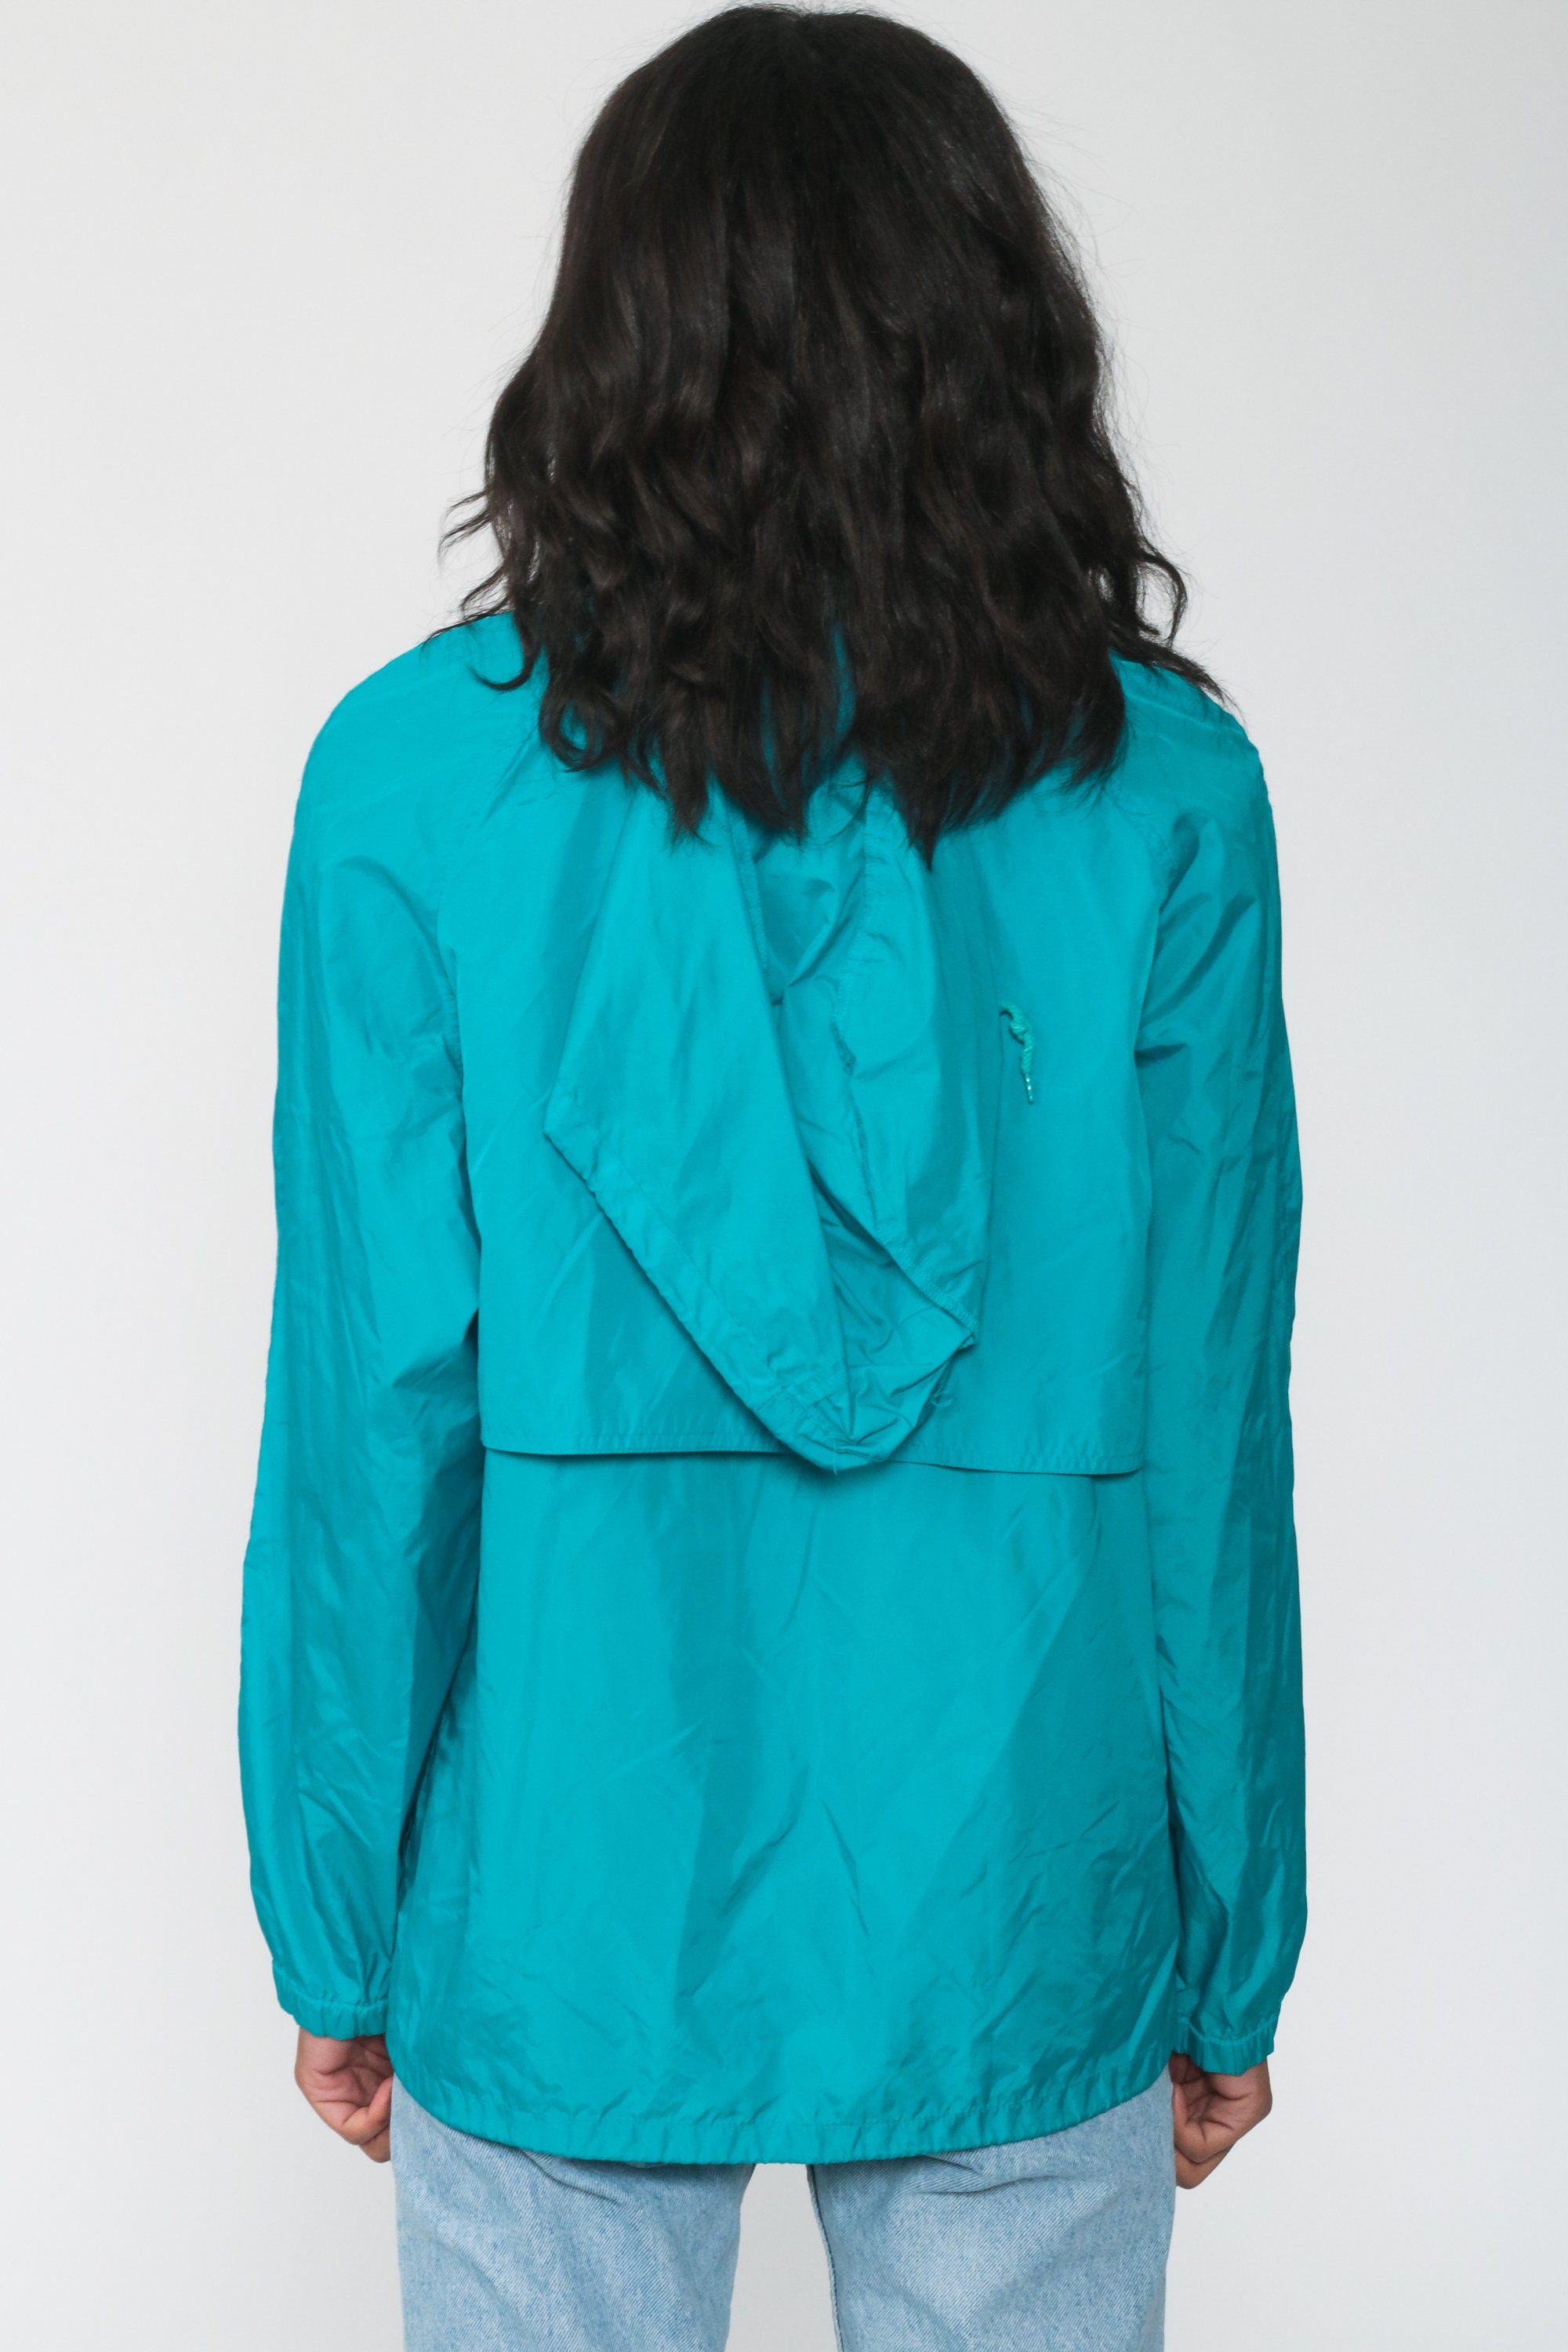 Turquoise Hooded Windbreaker Jacket 80s Woolrich Woman Zip Up Pullover ...